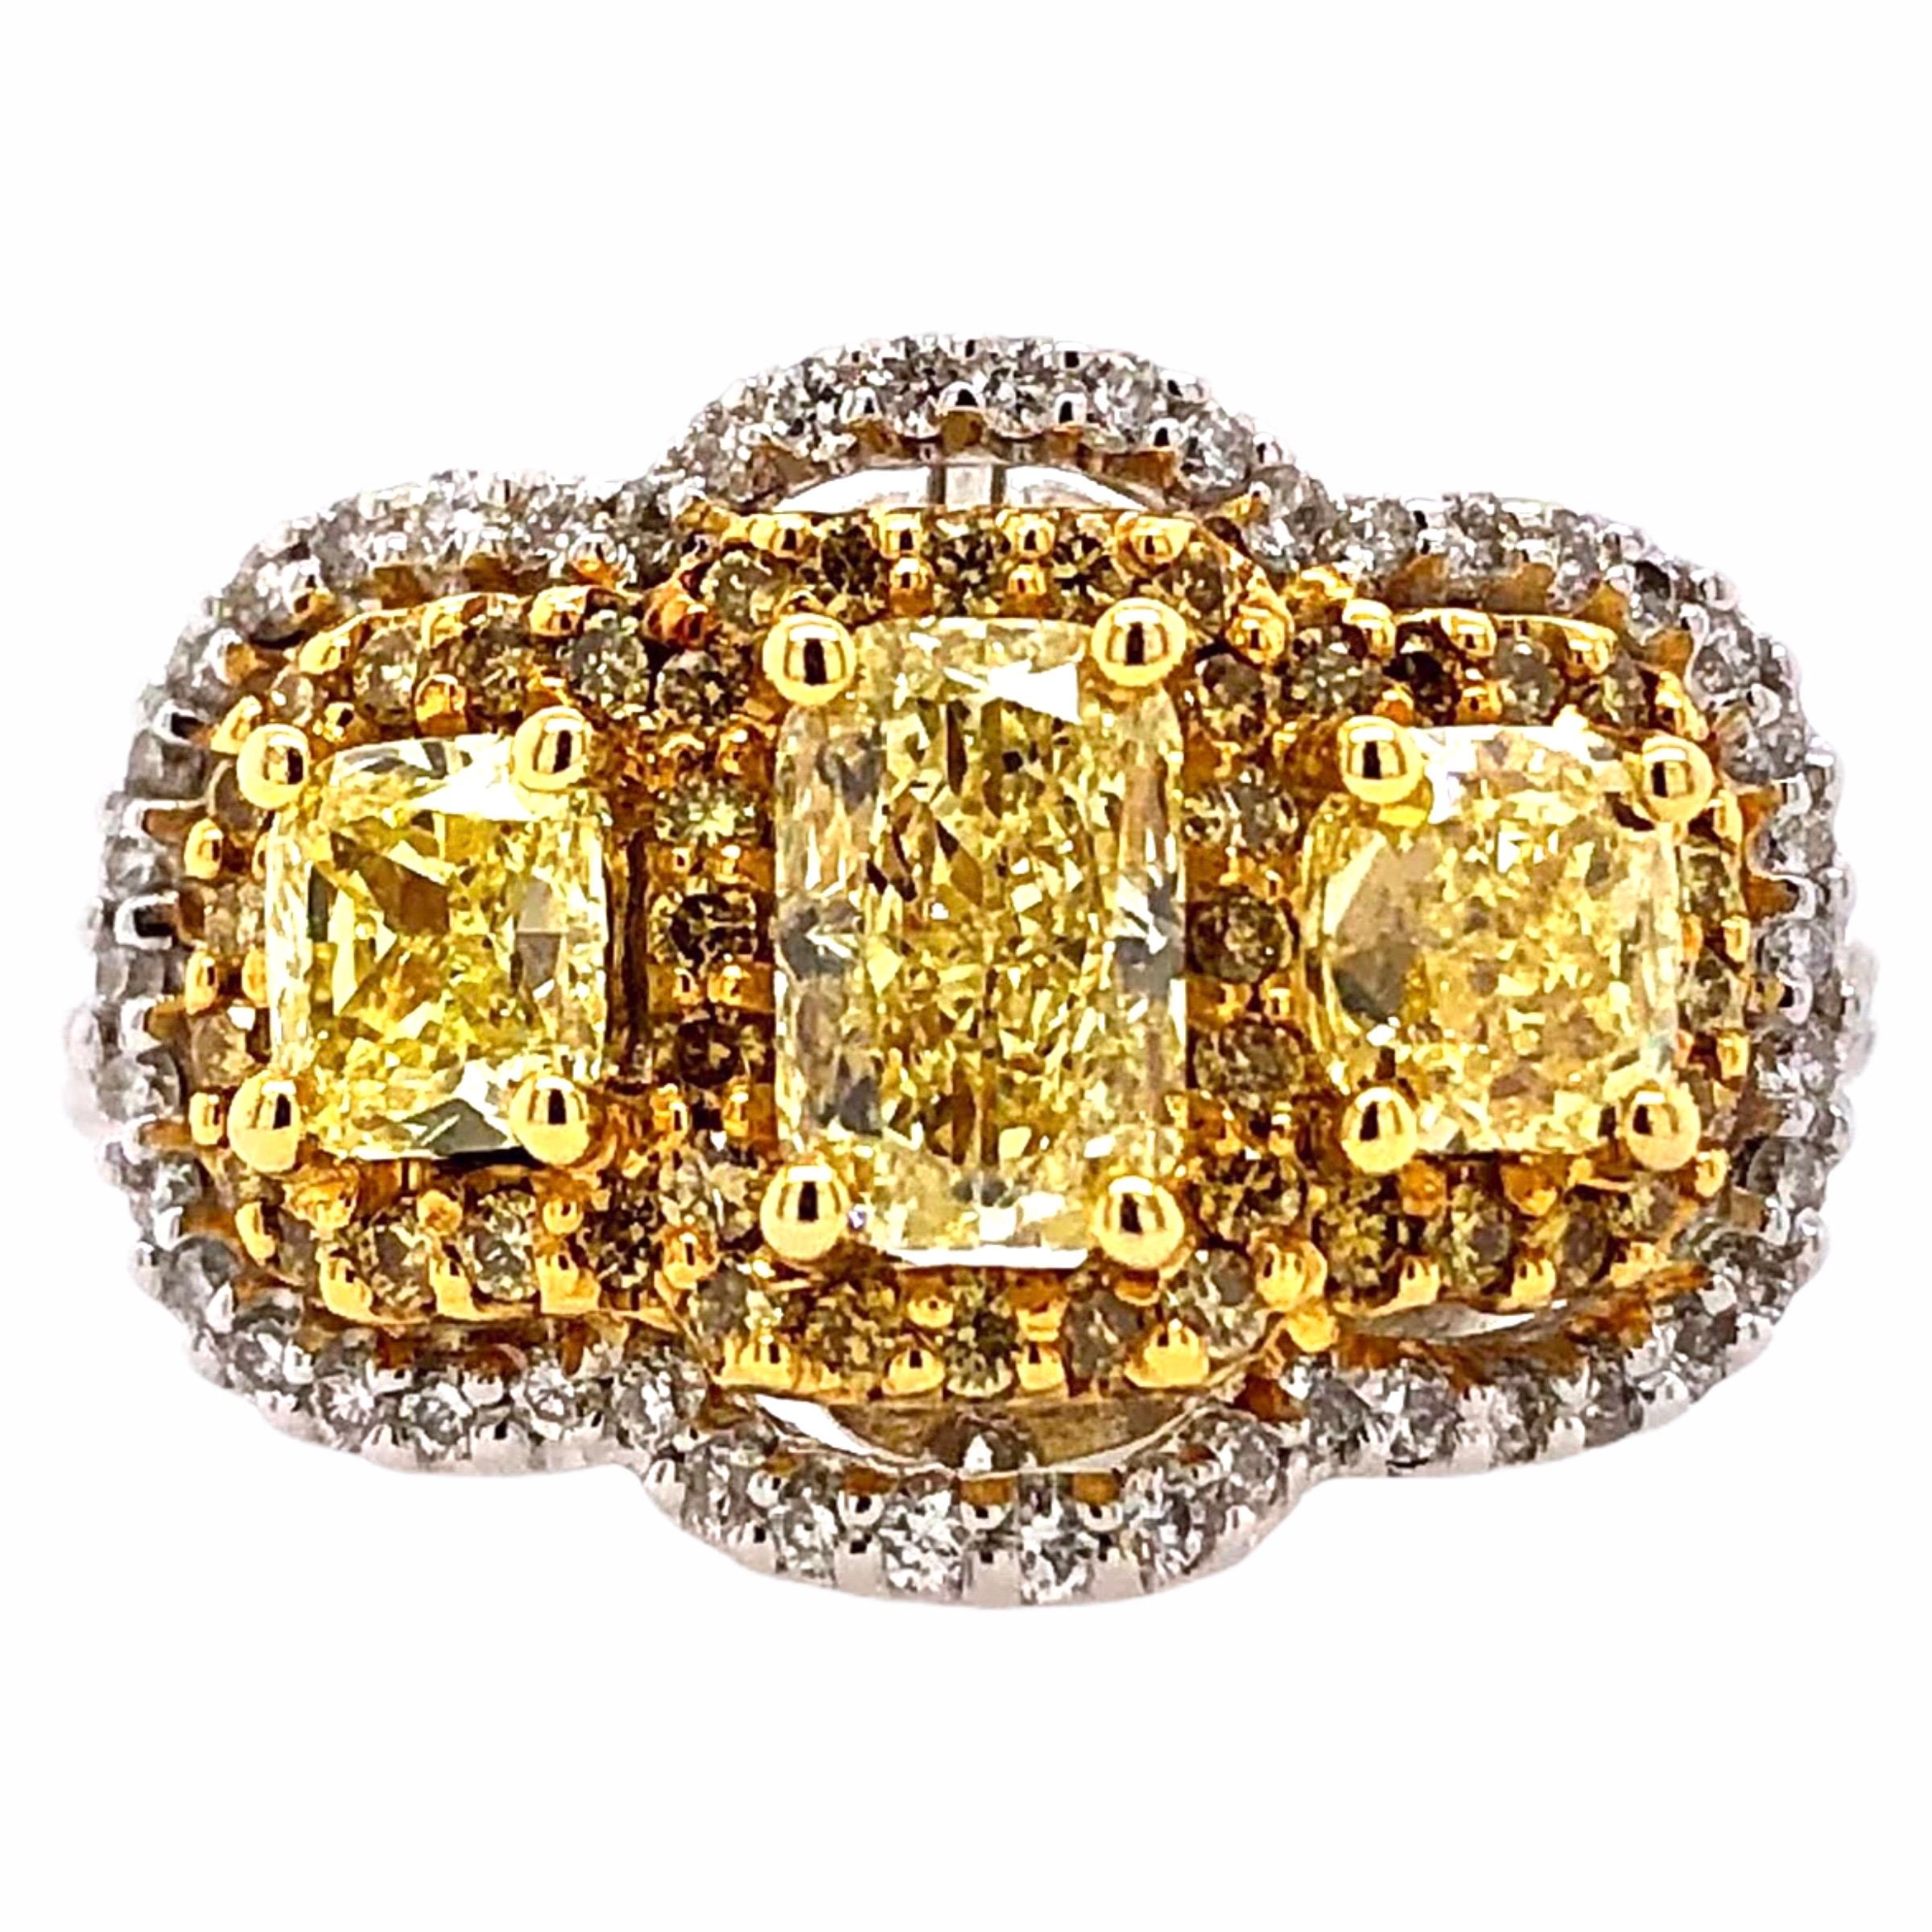 PARIS Craft House Fancy Yellow Diamond Three Stone Ring in 18 Karat White/Yellow Gold.

- 3 Cushion-cut Fancy Yellow Diamonds/1.36ct
- 44 Yellow Diamonds/0.24ct
- 70 Round Diamonds/0.41ct
- 18K White/Yellow Gold/6.83g

Designed and crafted at PARIS